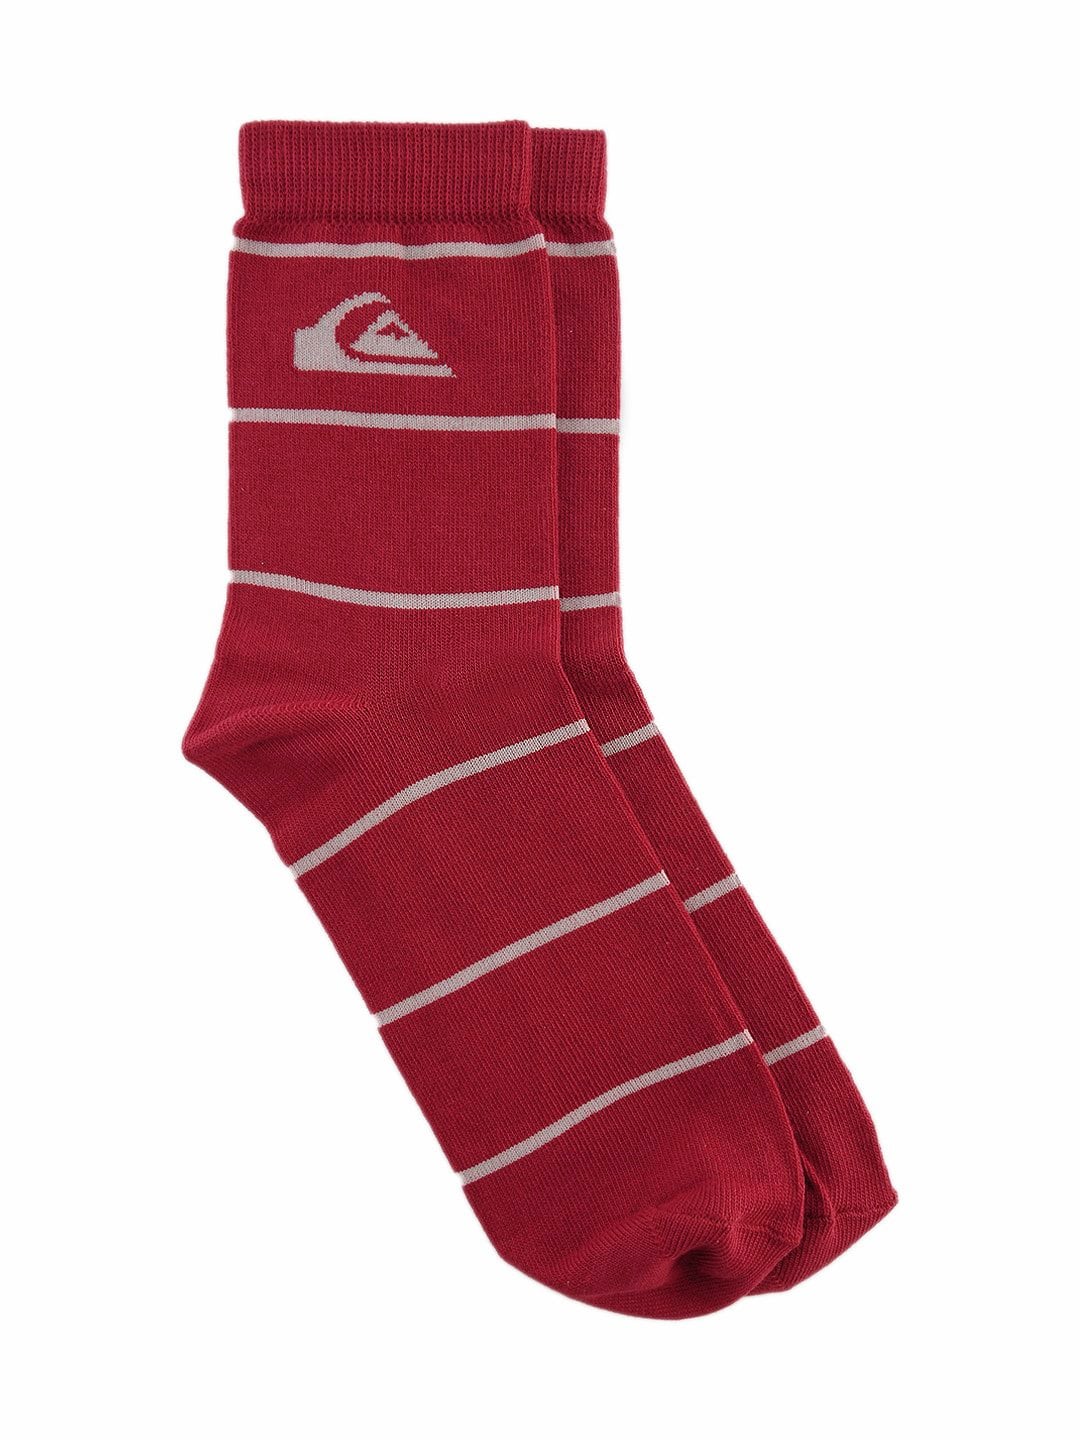 Quiksilver Men Red Socks